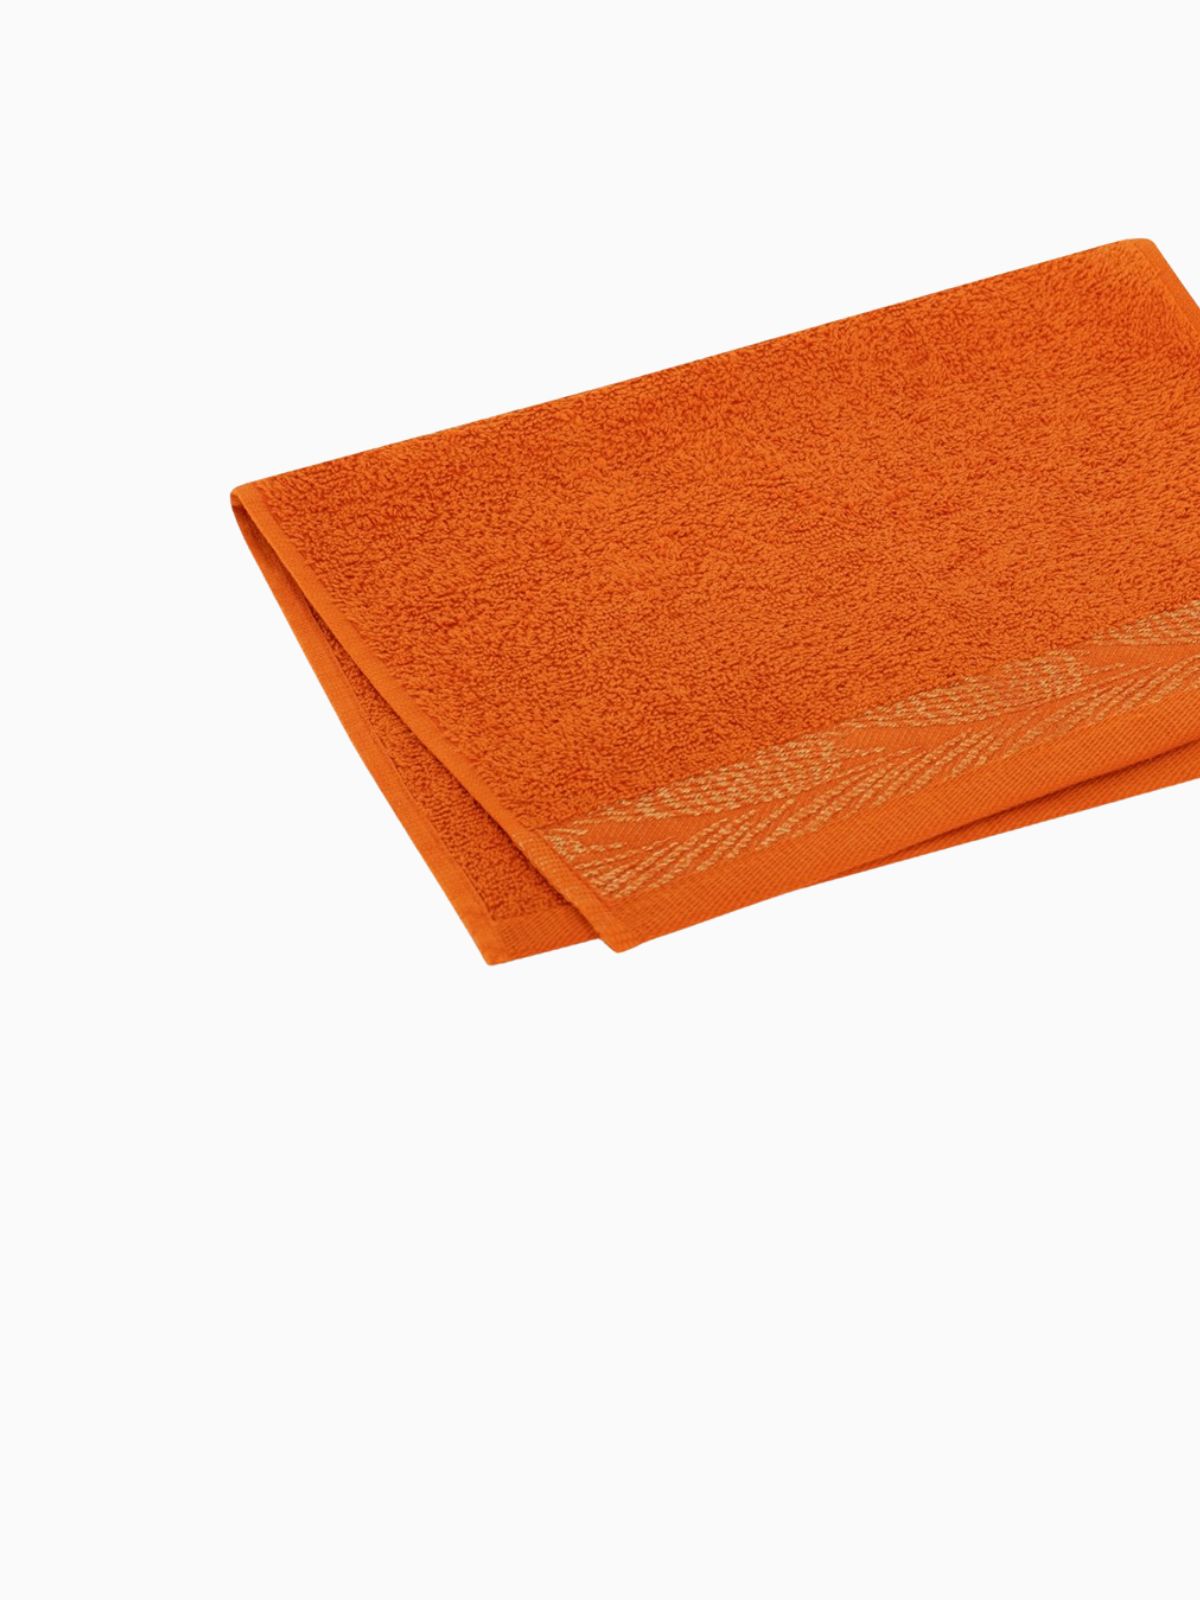 Asciugamano Allium in 100% cotone, colore arancione 30x50 cm.-4